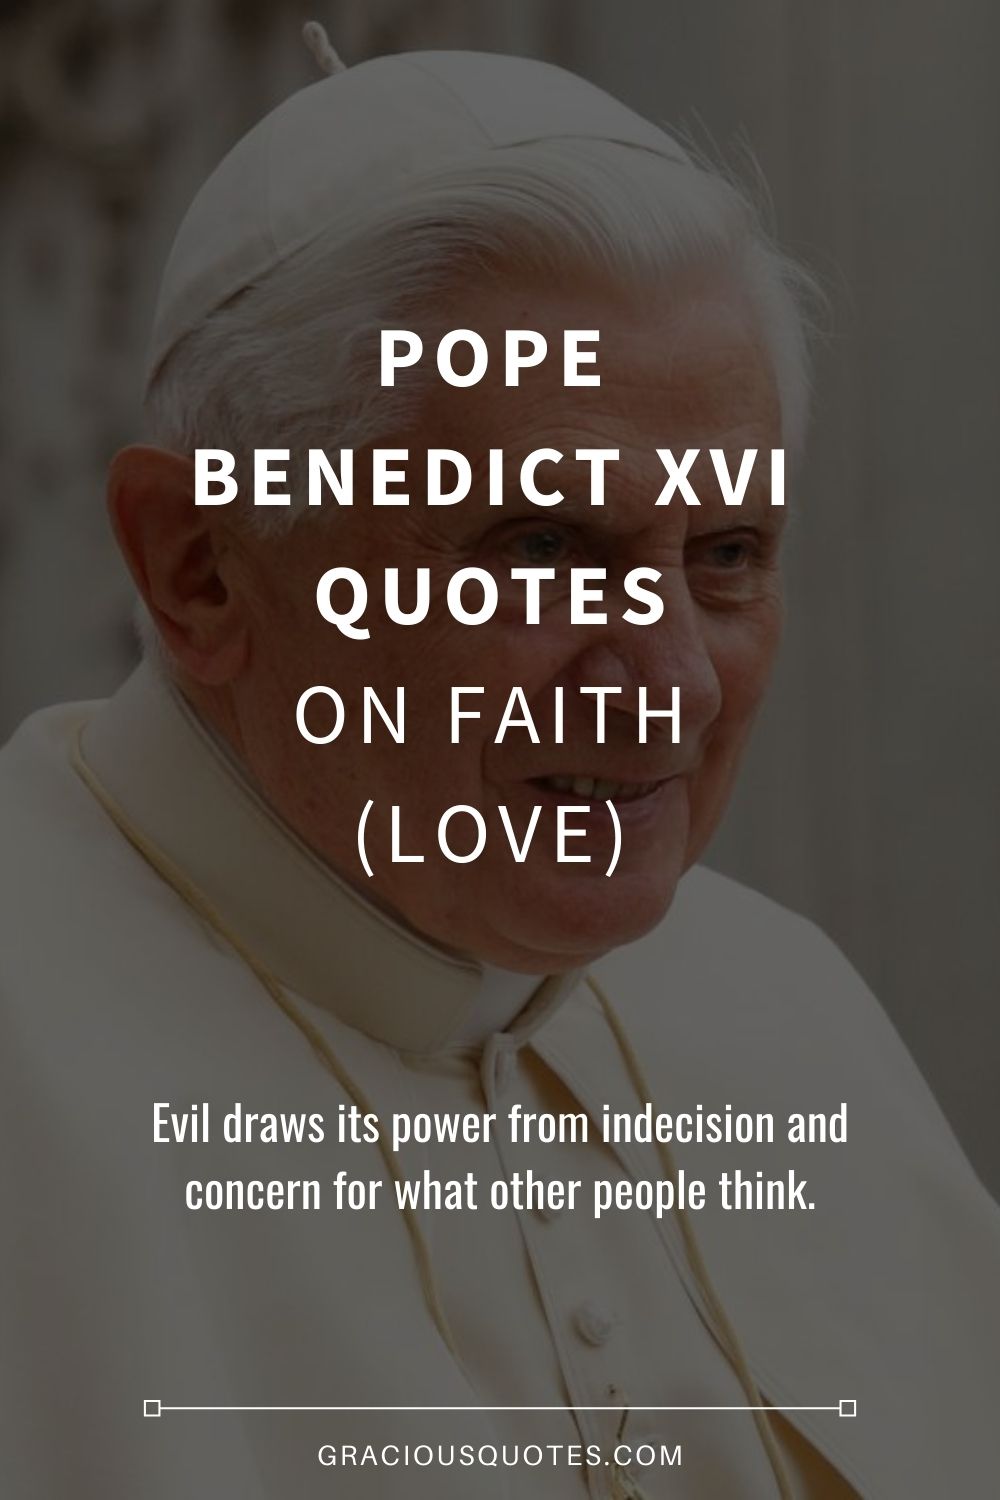 Pope Benedict XVI Quotes on Faith (LOVE) - Gracious Quotes